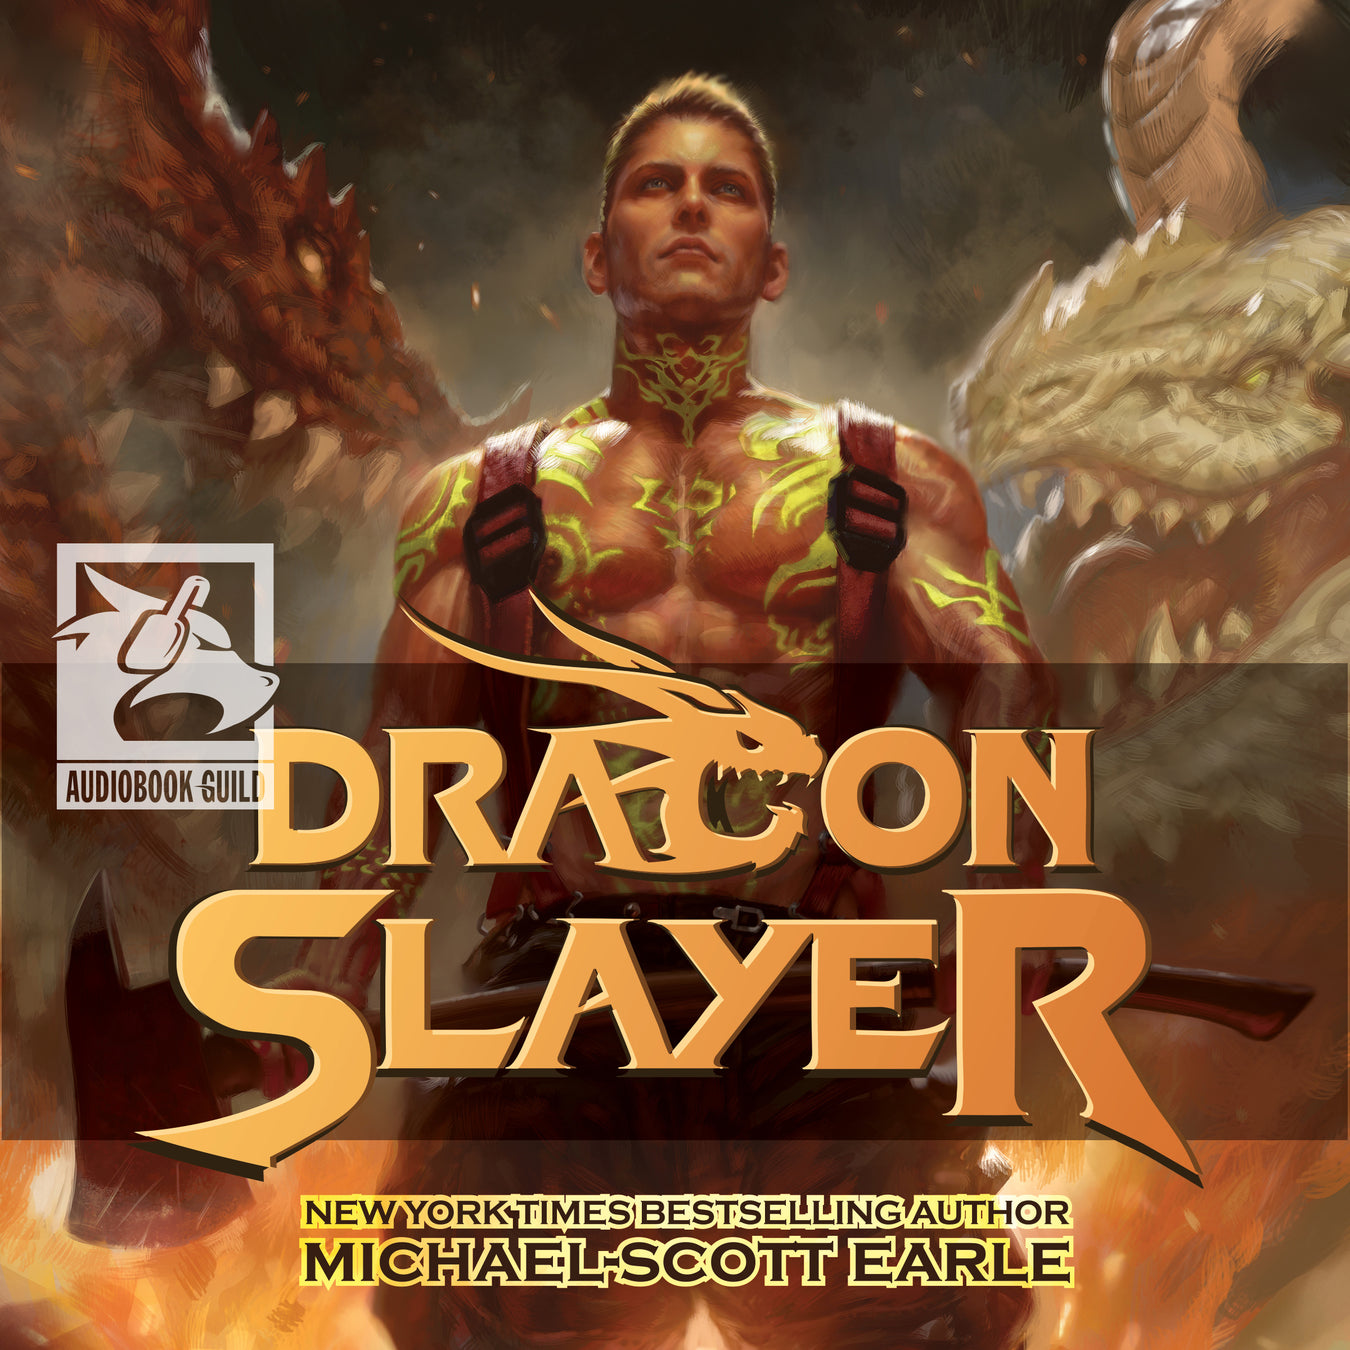 Dragon Slayer by Michael-Scott Earle